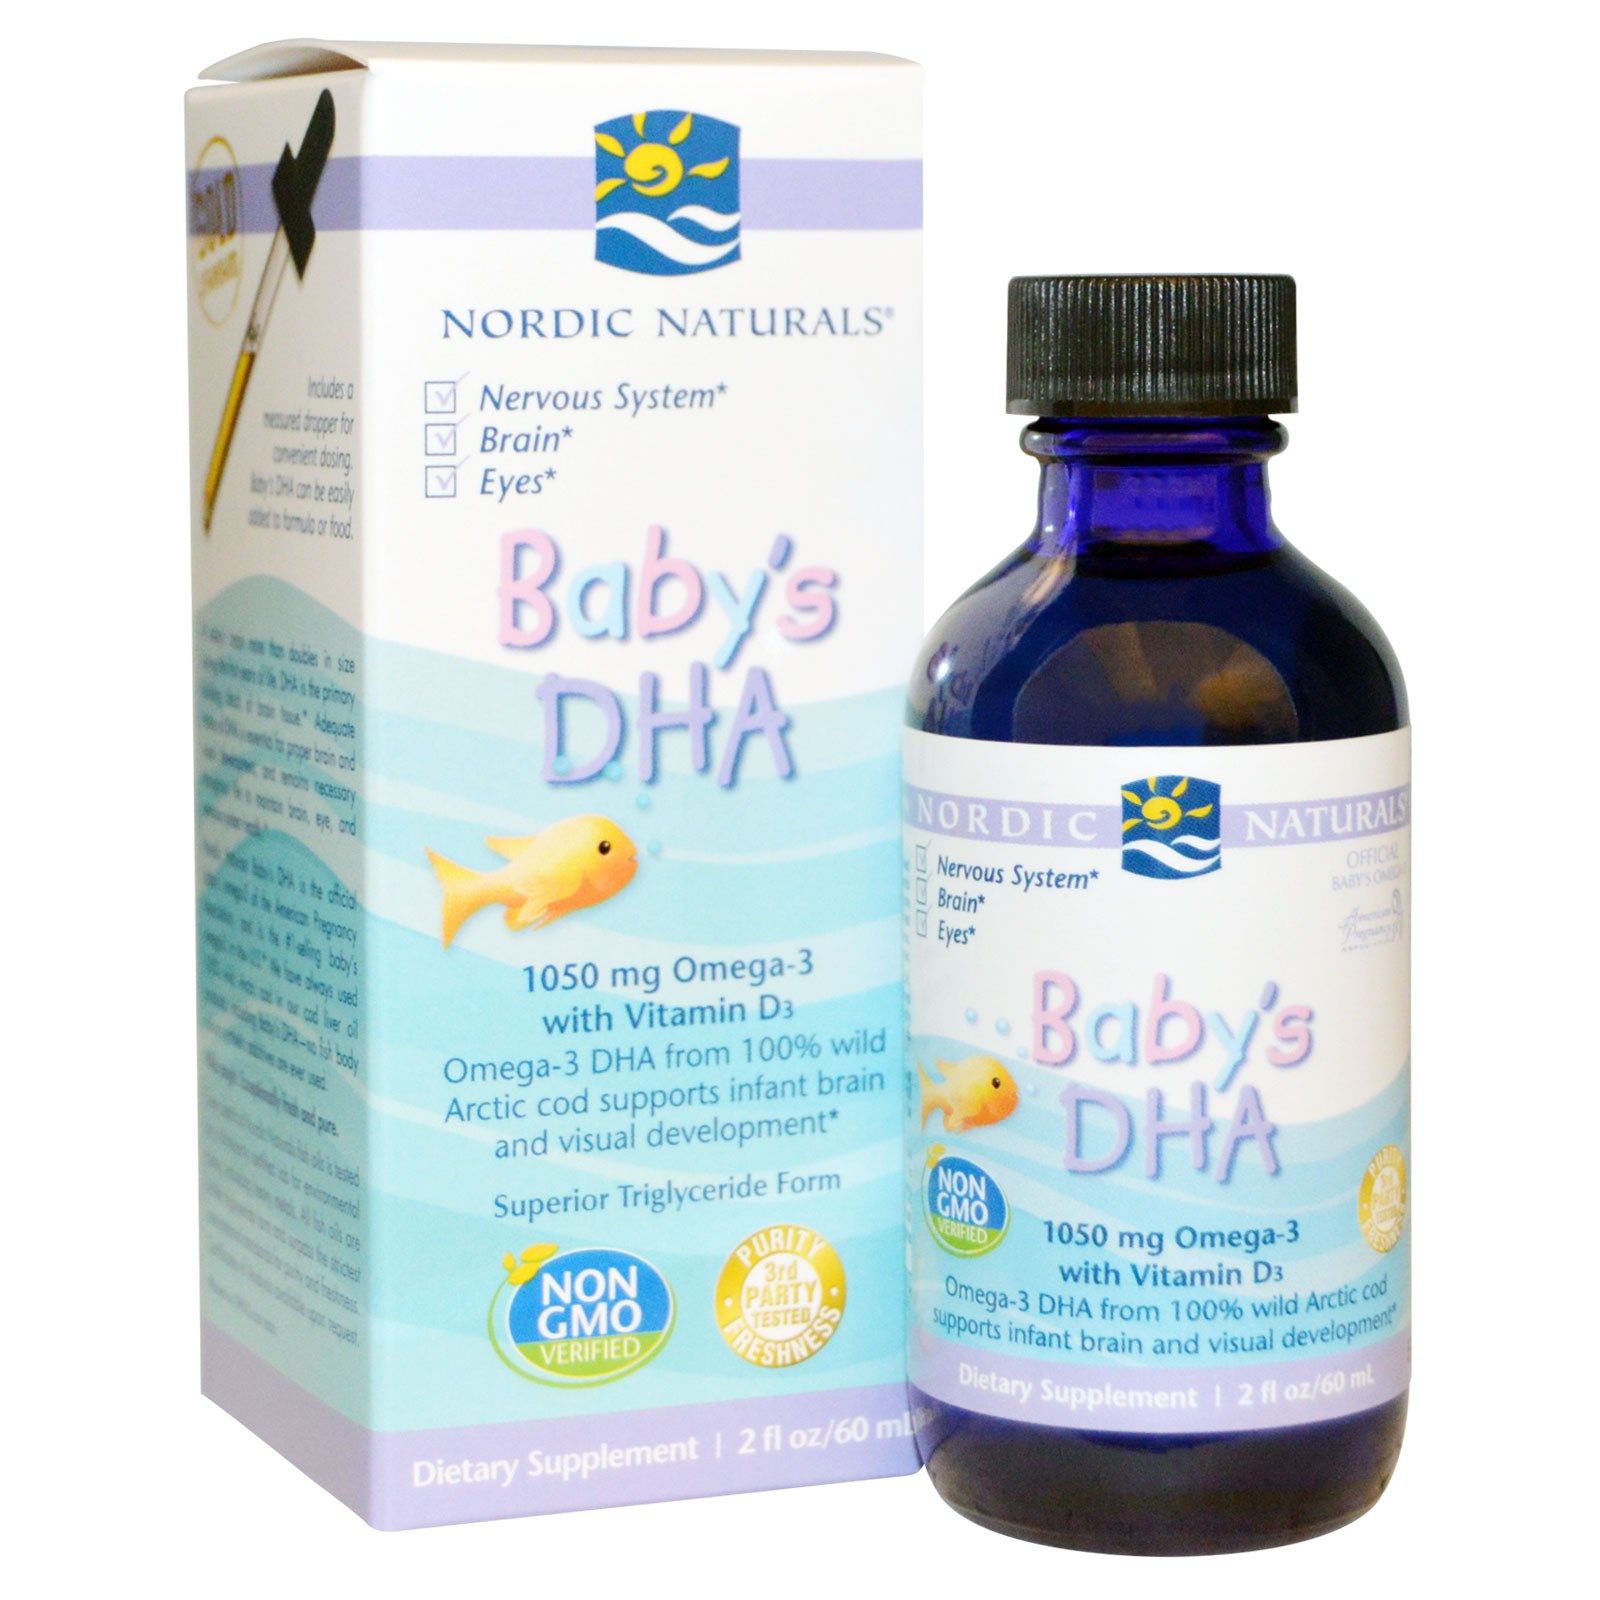 Baby's DHA bổ sung Omega 3, Vitamin D3